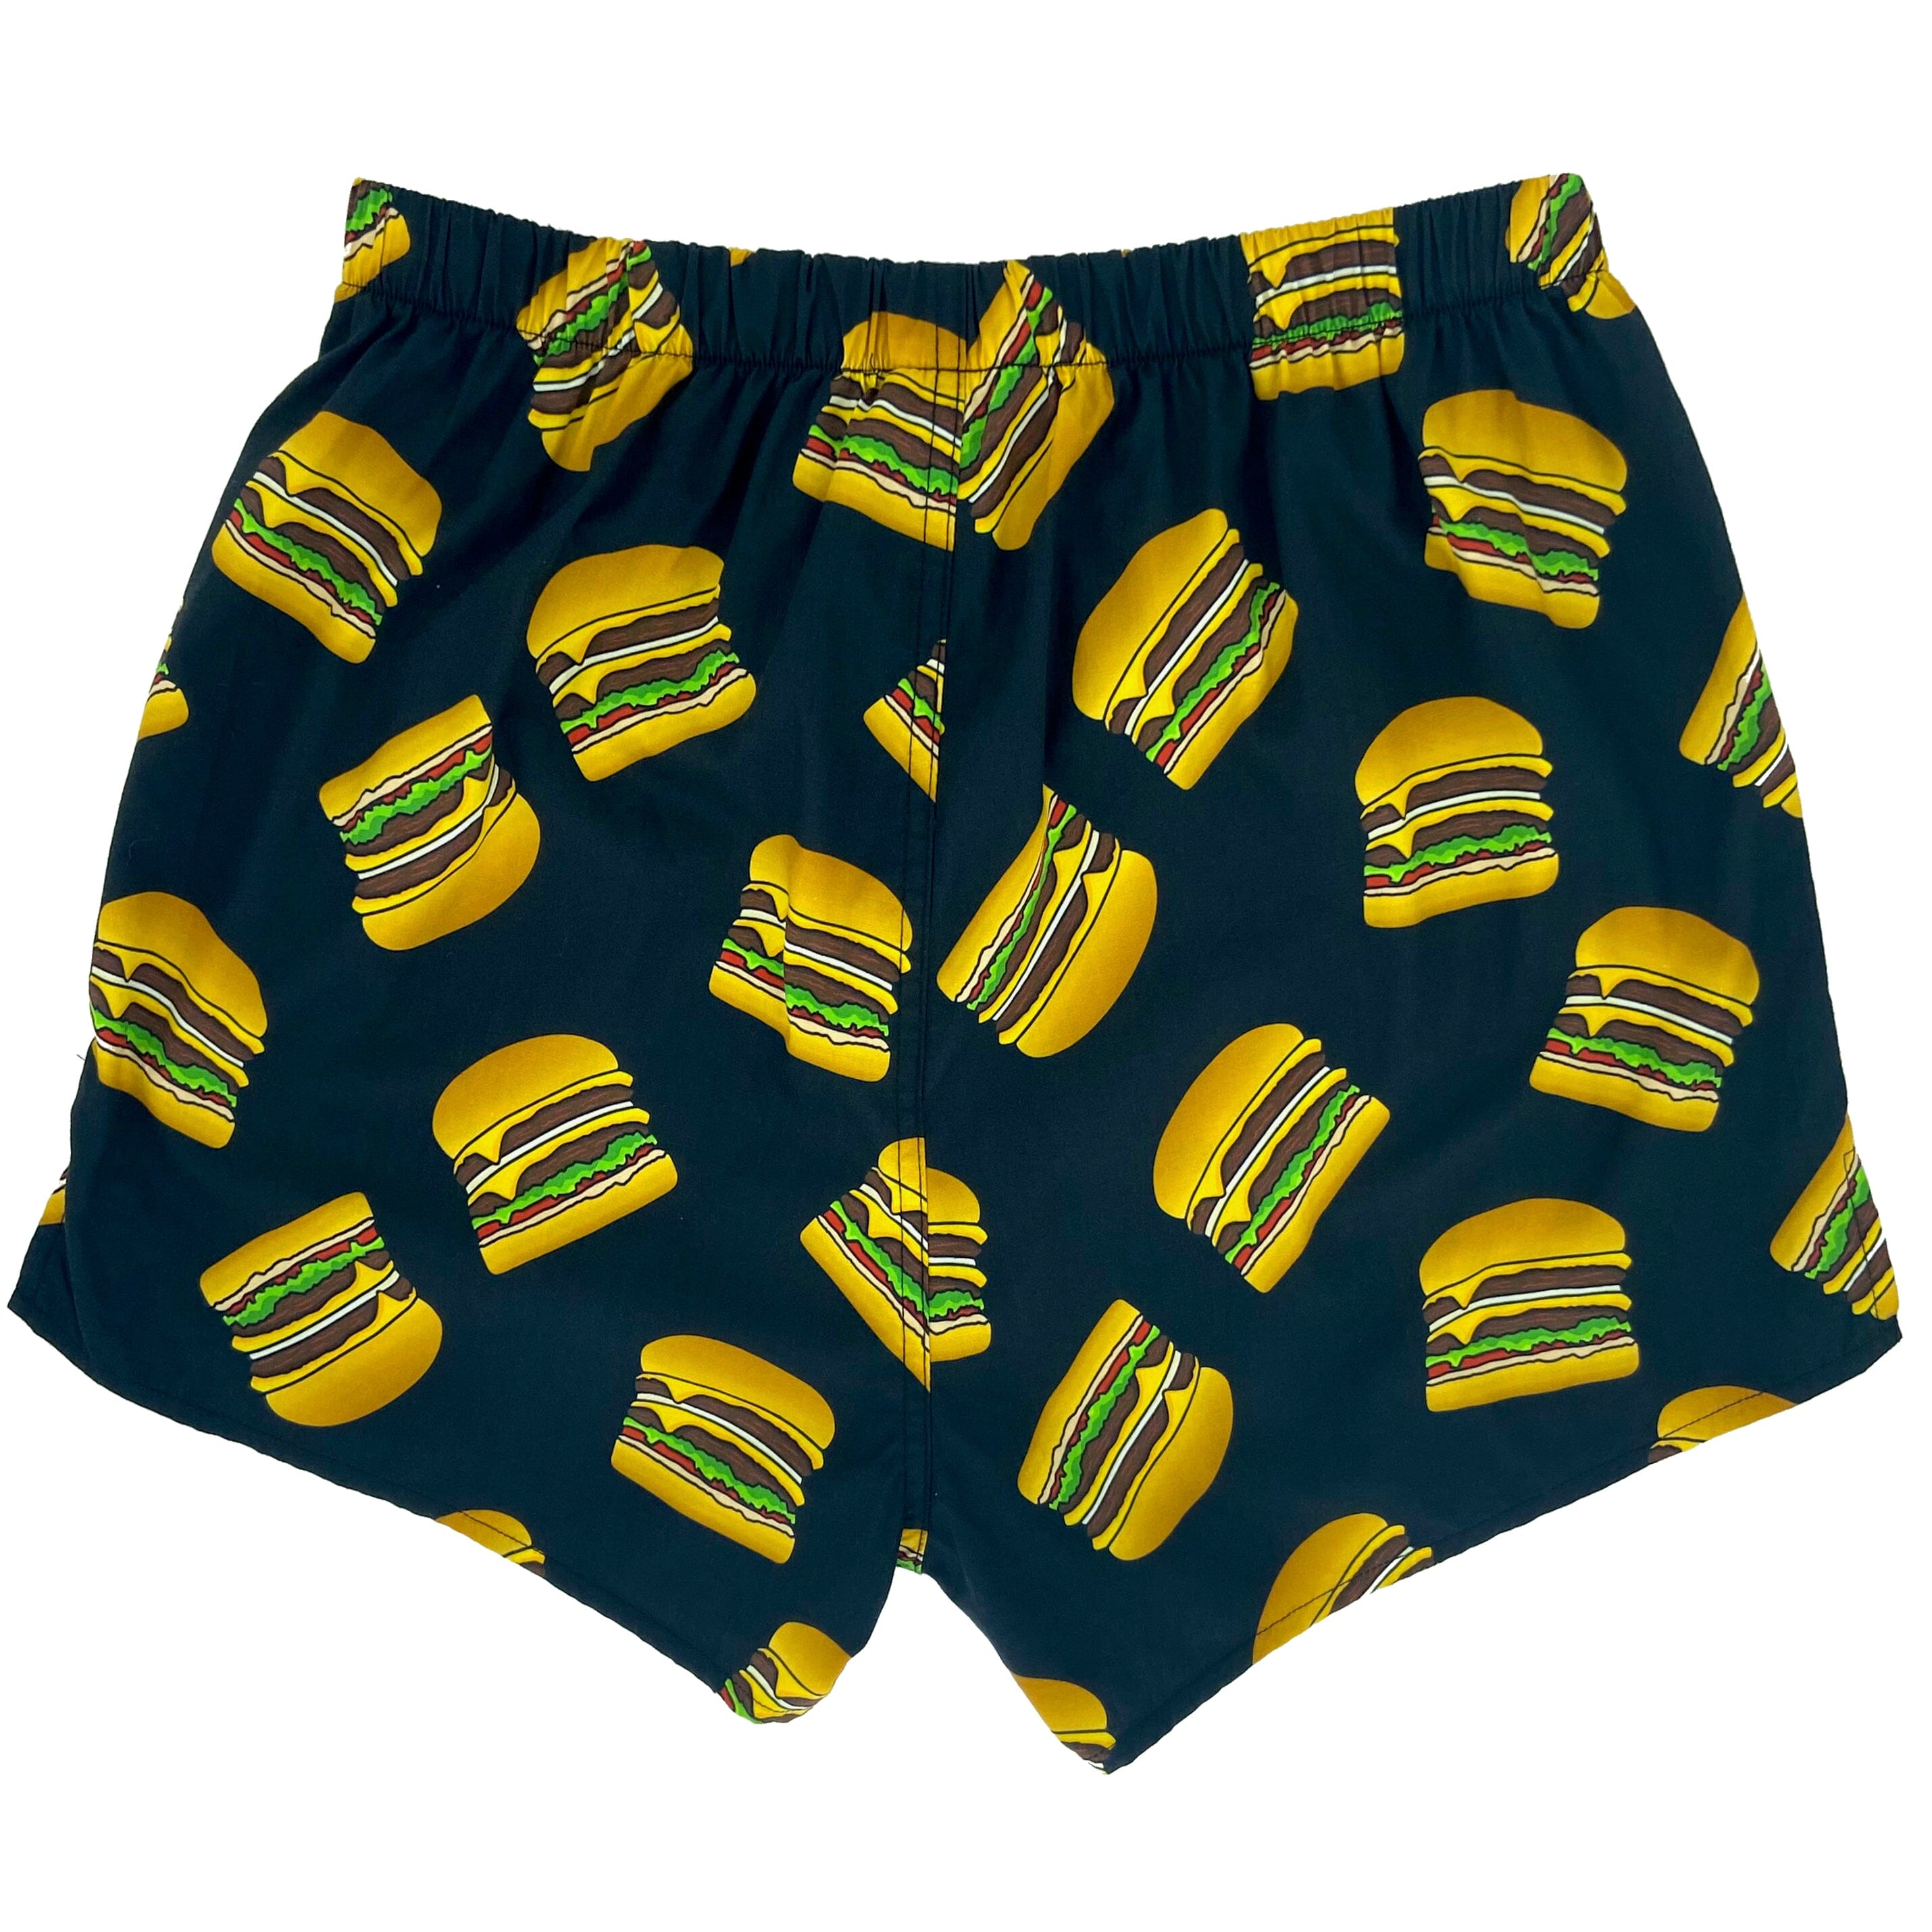 Men's Food Themed Cheeseburger Bun Patterned Cotton Boxer Shorts